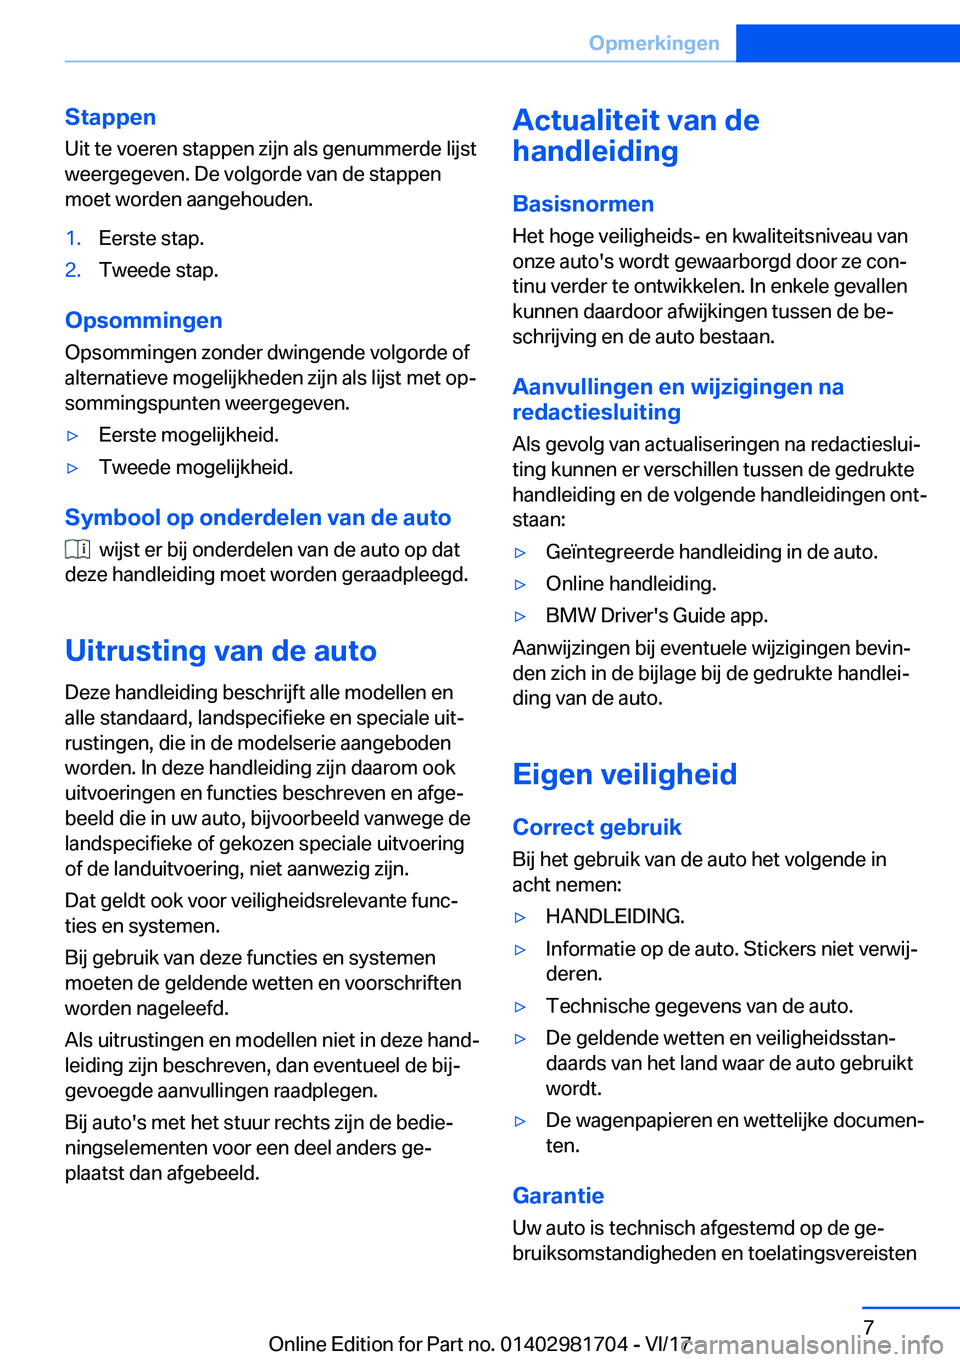 BMW M4 2018  Instructieboekjes (in Dutch) �S�t�a�p�p�e�n
�U�i�t� �t�e� �v�o�e�r�e�n� �s�t�a�p�p�e�n� �z�i�j�n� �a�l�s� �g�e�n�u�m�m�e�r�d�e� �l�i�j�s�t �w�e�e�r�g�e�g�e�v�e�n�.� �D�e� �v�o�l�g�o�r�d�e� �v�a�n� �d�e� �s�t�a�p�p�e�n�m�o�e�t� �w